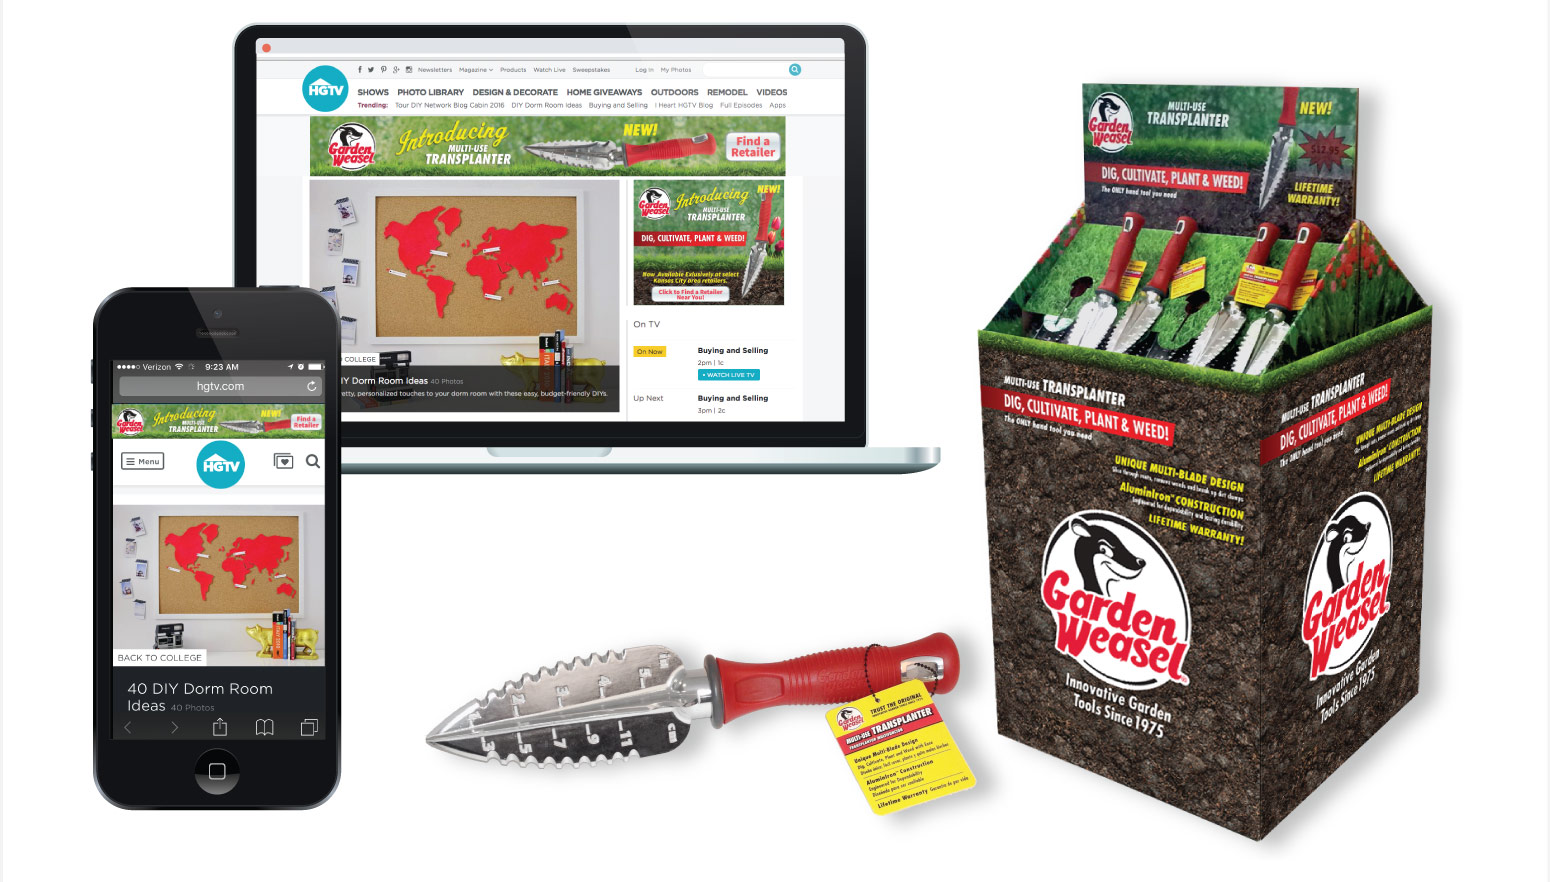 Garden Weasel - Product Marketing - Test Market Strategy